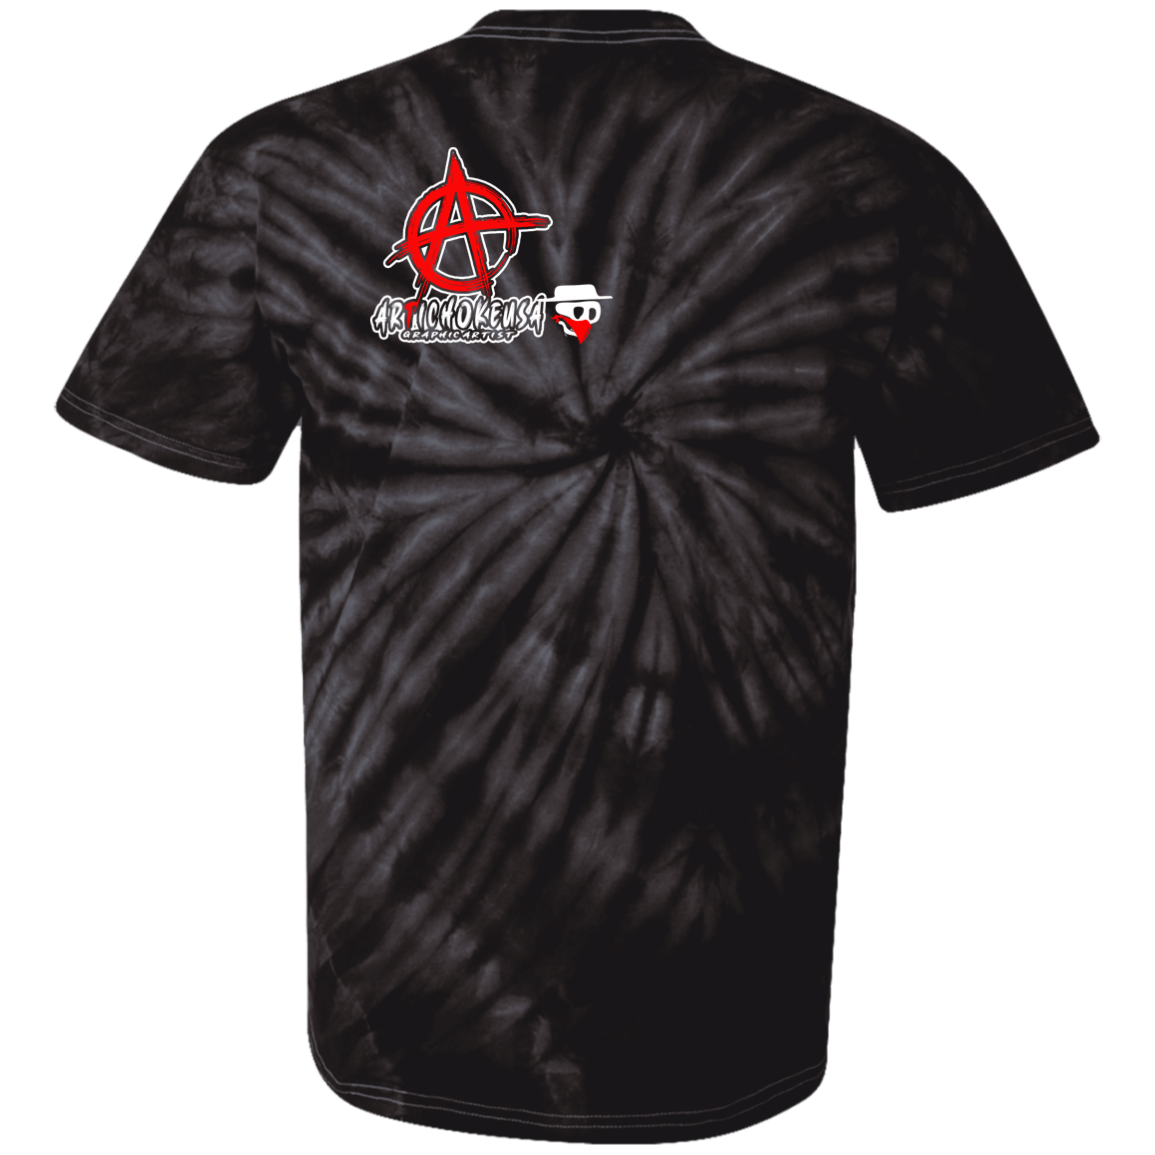 ArtichokeUSA Custom Design. Social Distancing. Social Distortion Parody. Tie Dye 100% Cotton T-Shirt